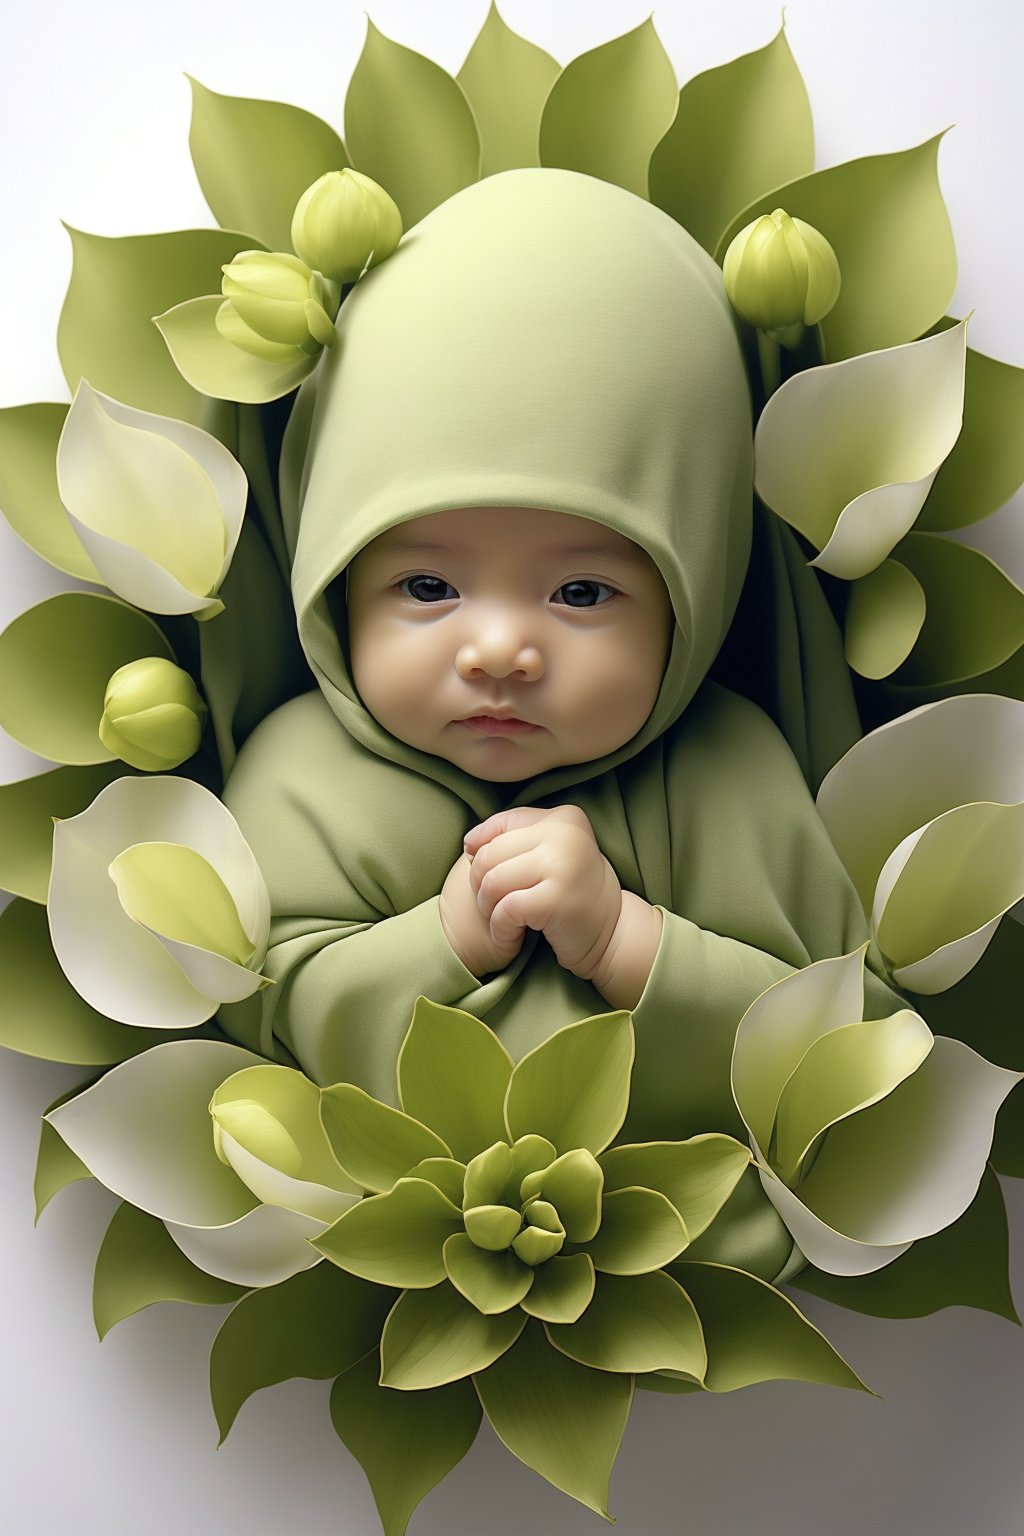 masterpiece,best quality,<lora:婴儿写真:1>,baby,flower,green,